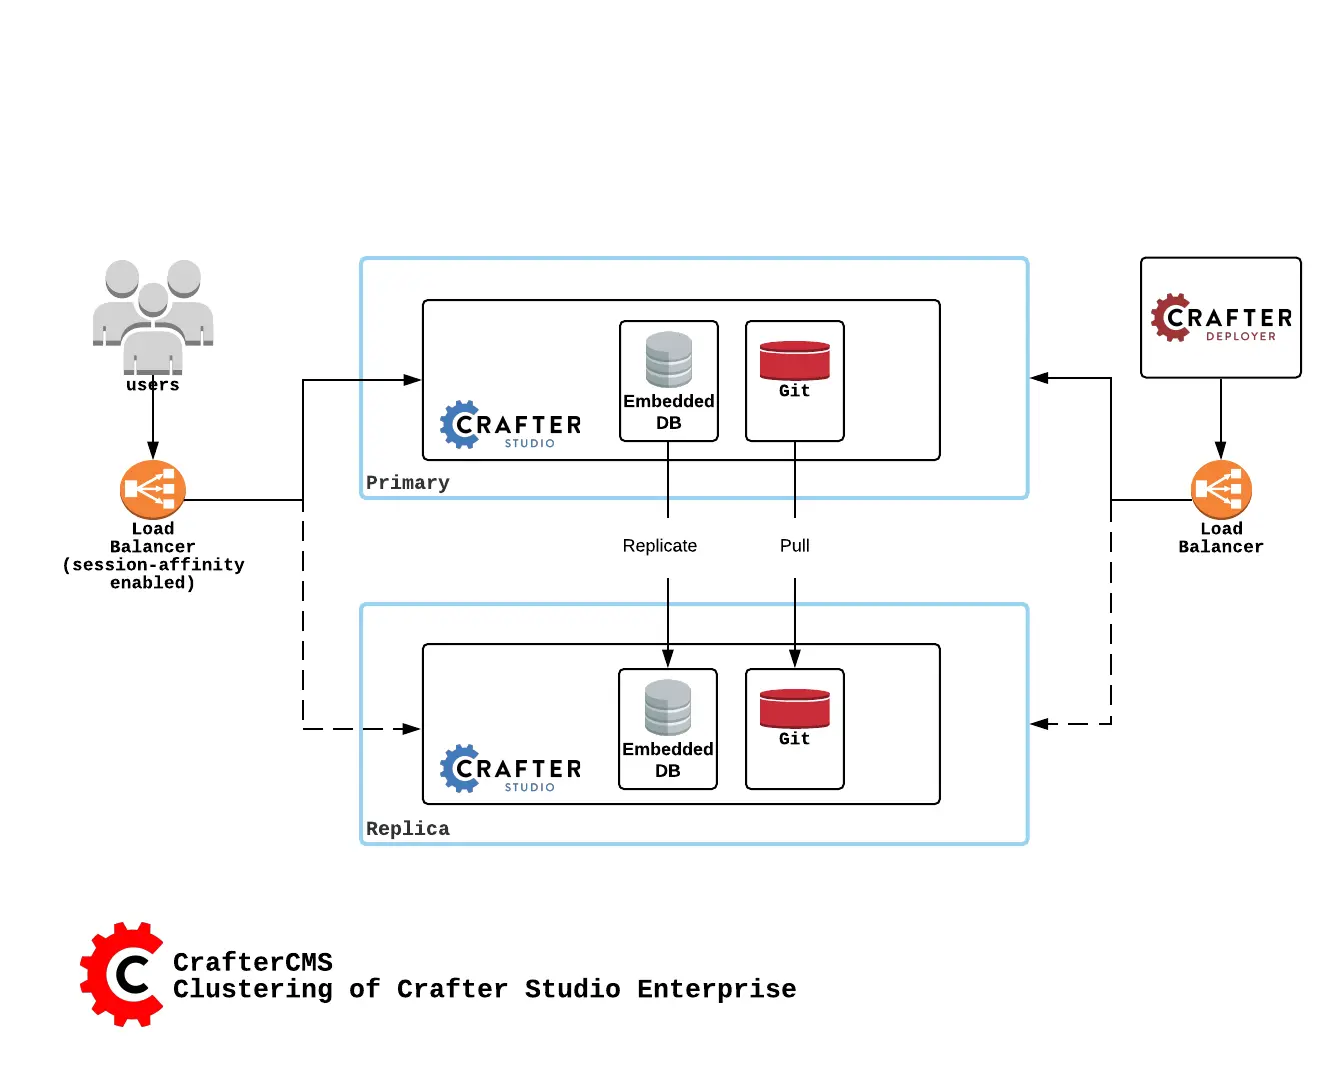 CrafterCMS - Studio Enterprise Clustering